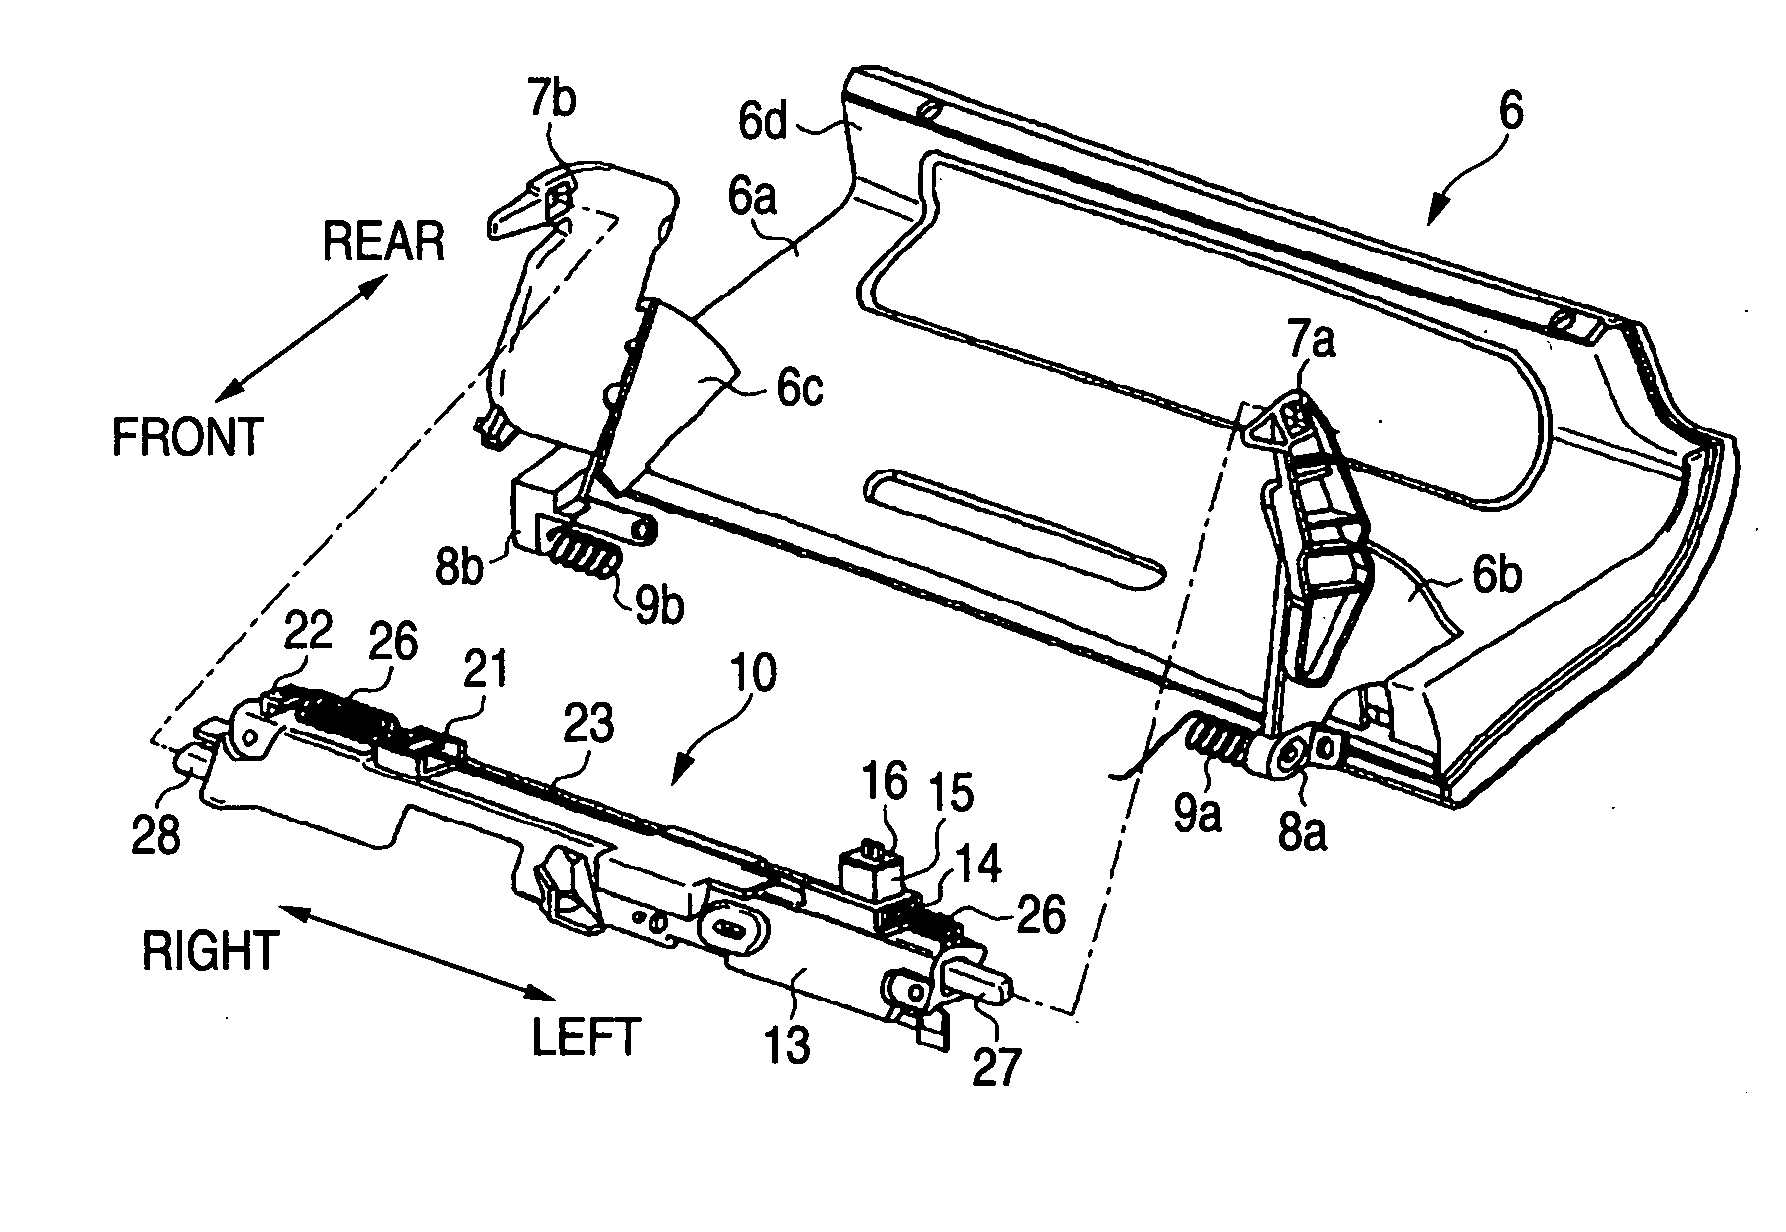 Locking apparatus and glove box